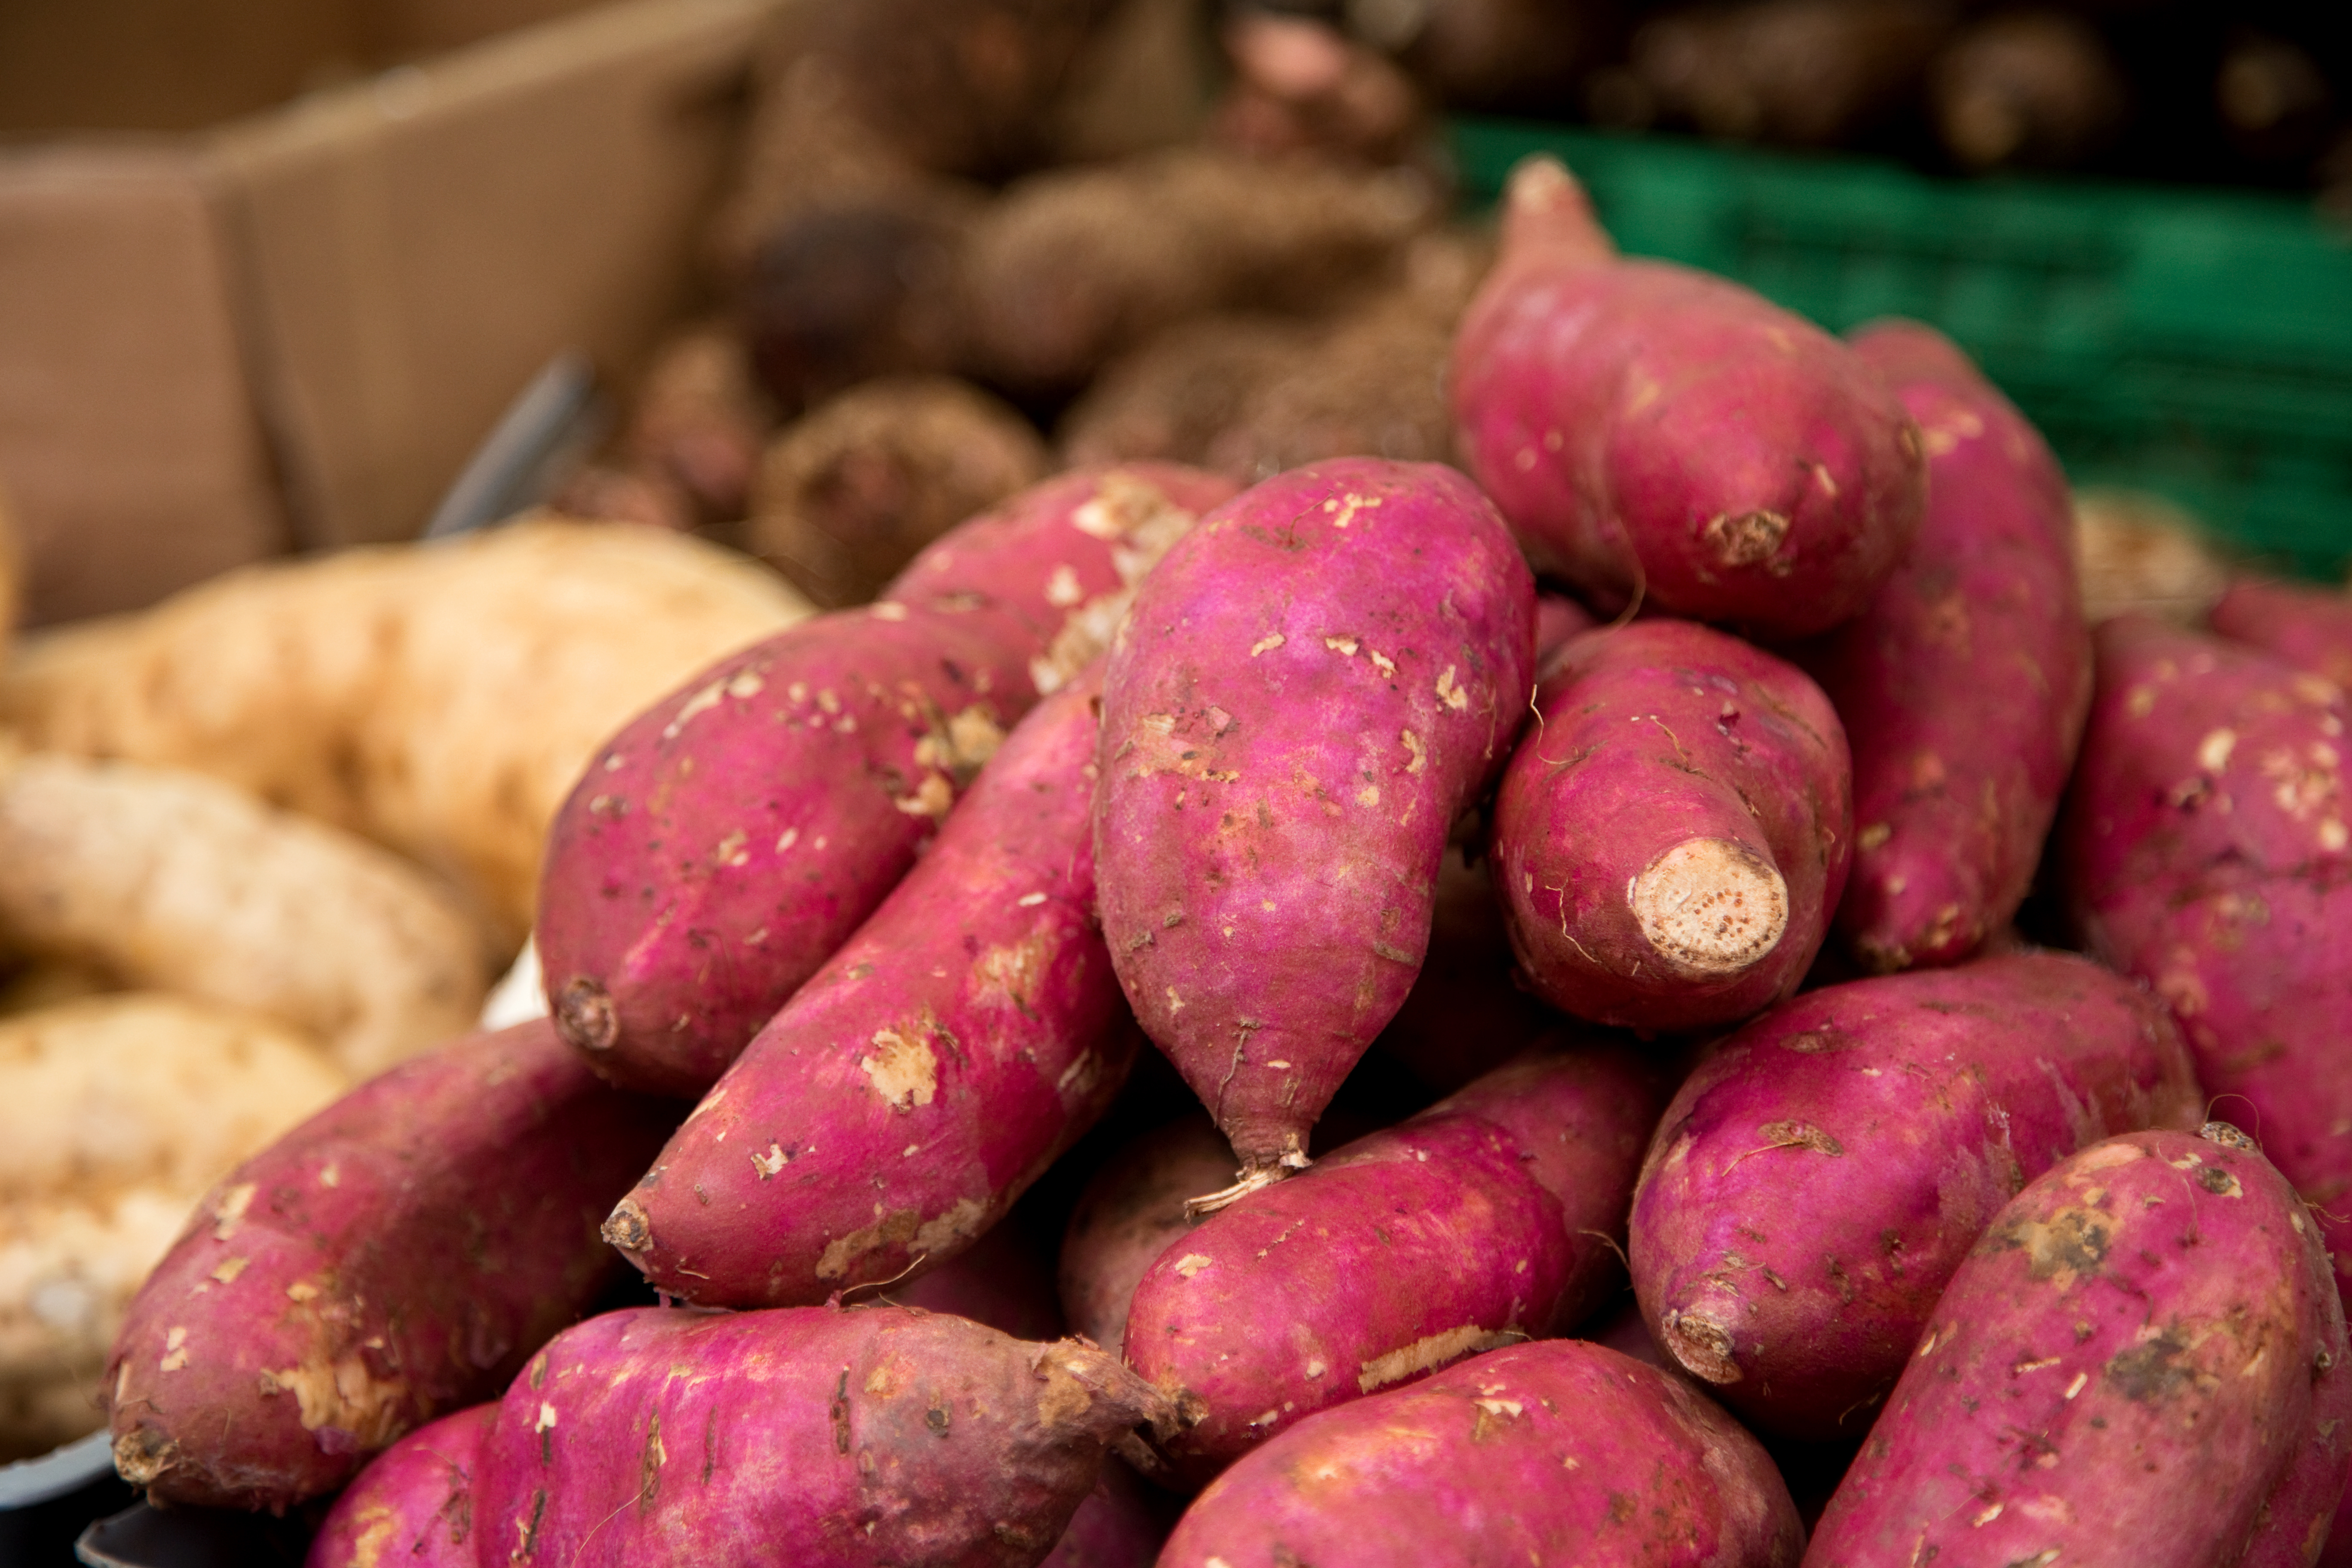 sweet potatoes and yams - sweet potatoes - varieties - varietals - holiday food - fall harvest - harvest season - tubers - root vegetables - yams